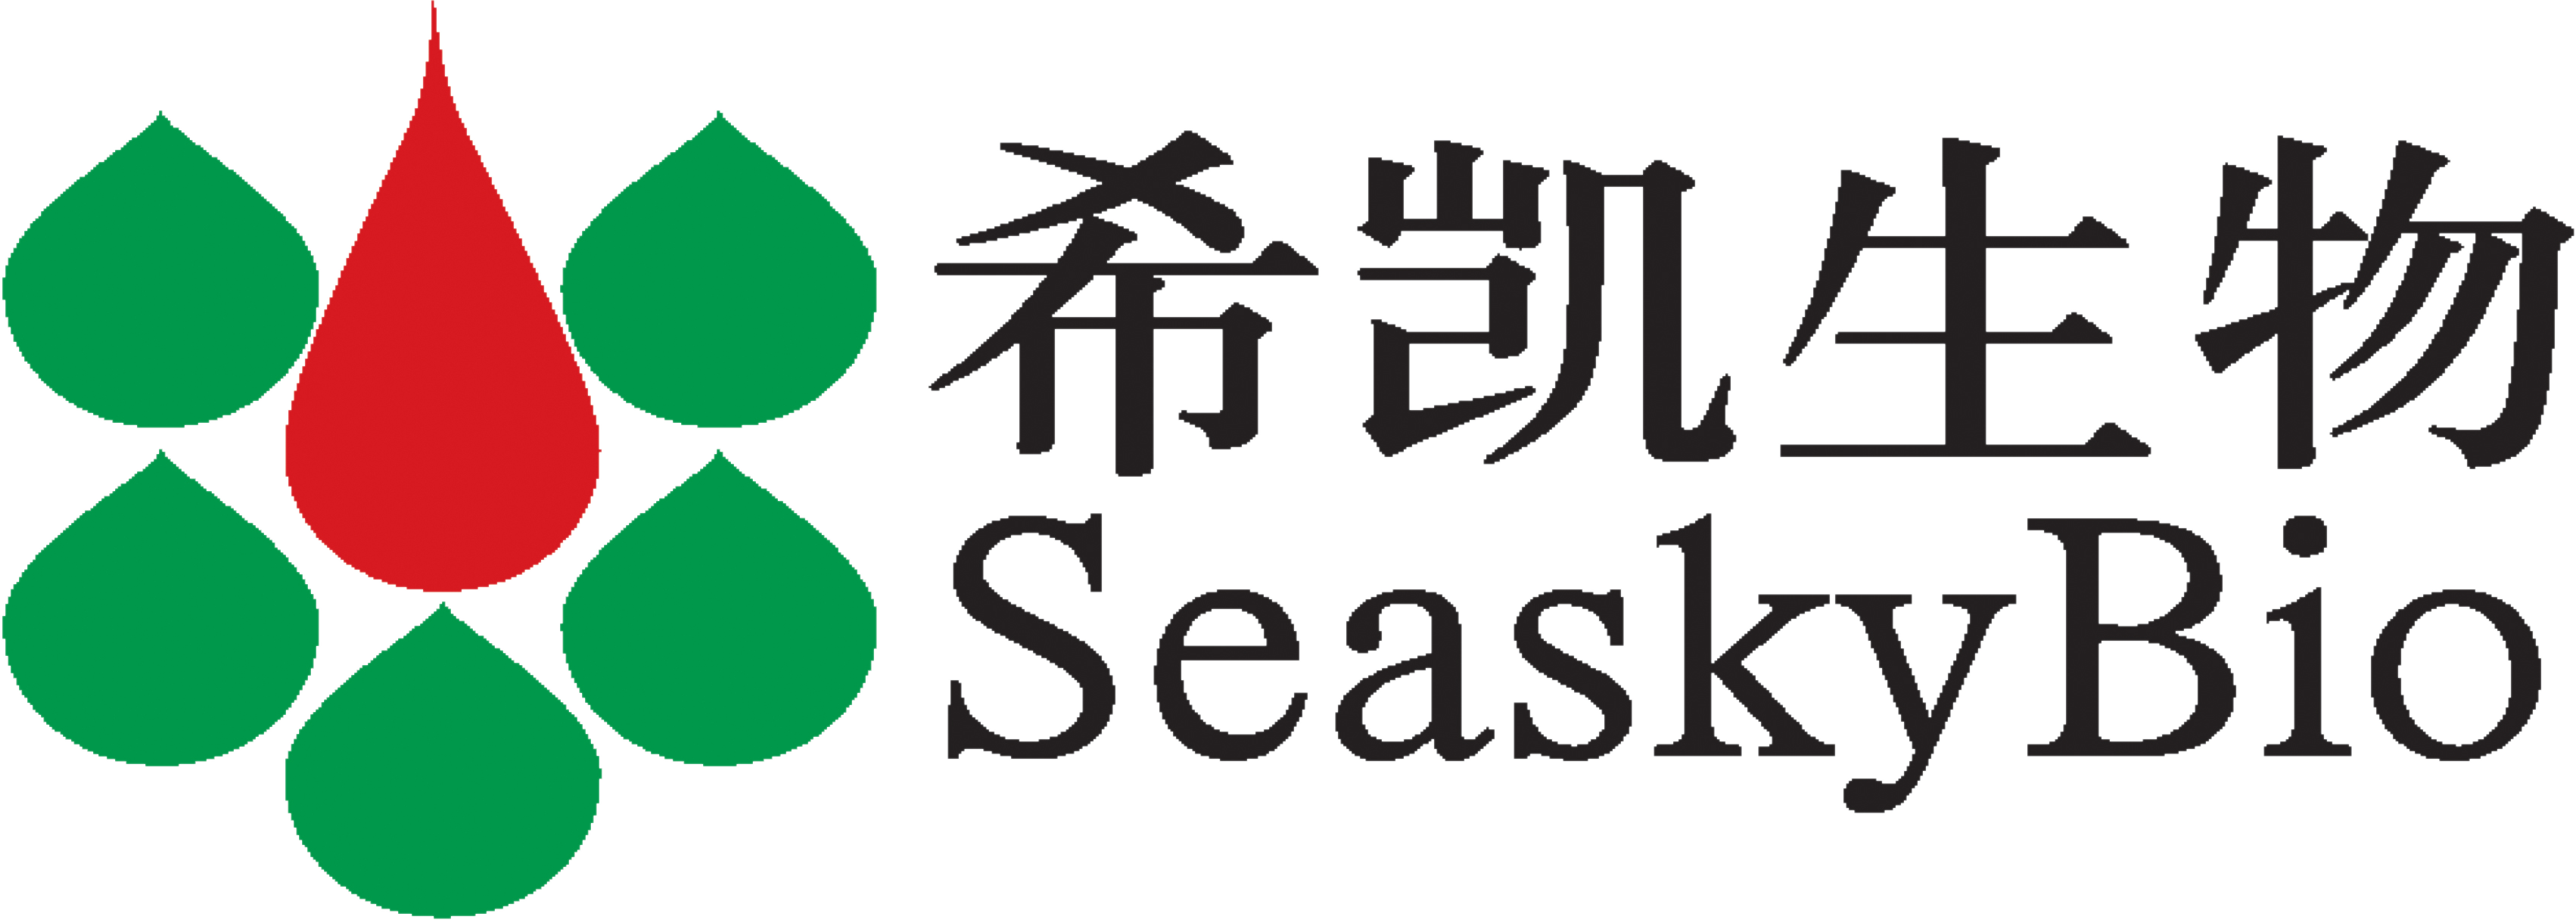 Seaskybio Logo